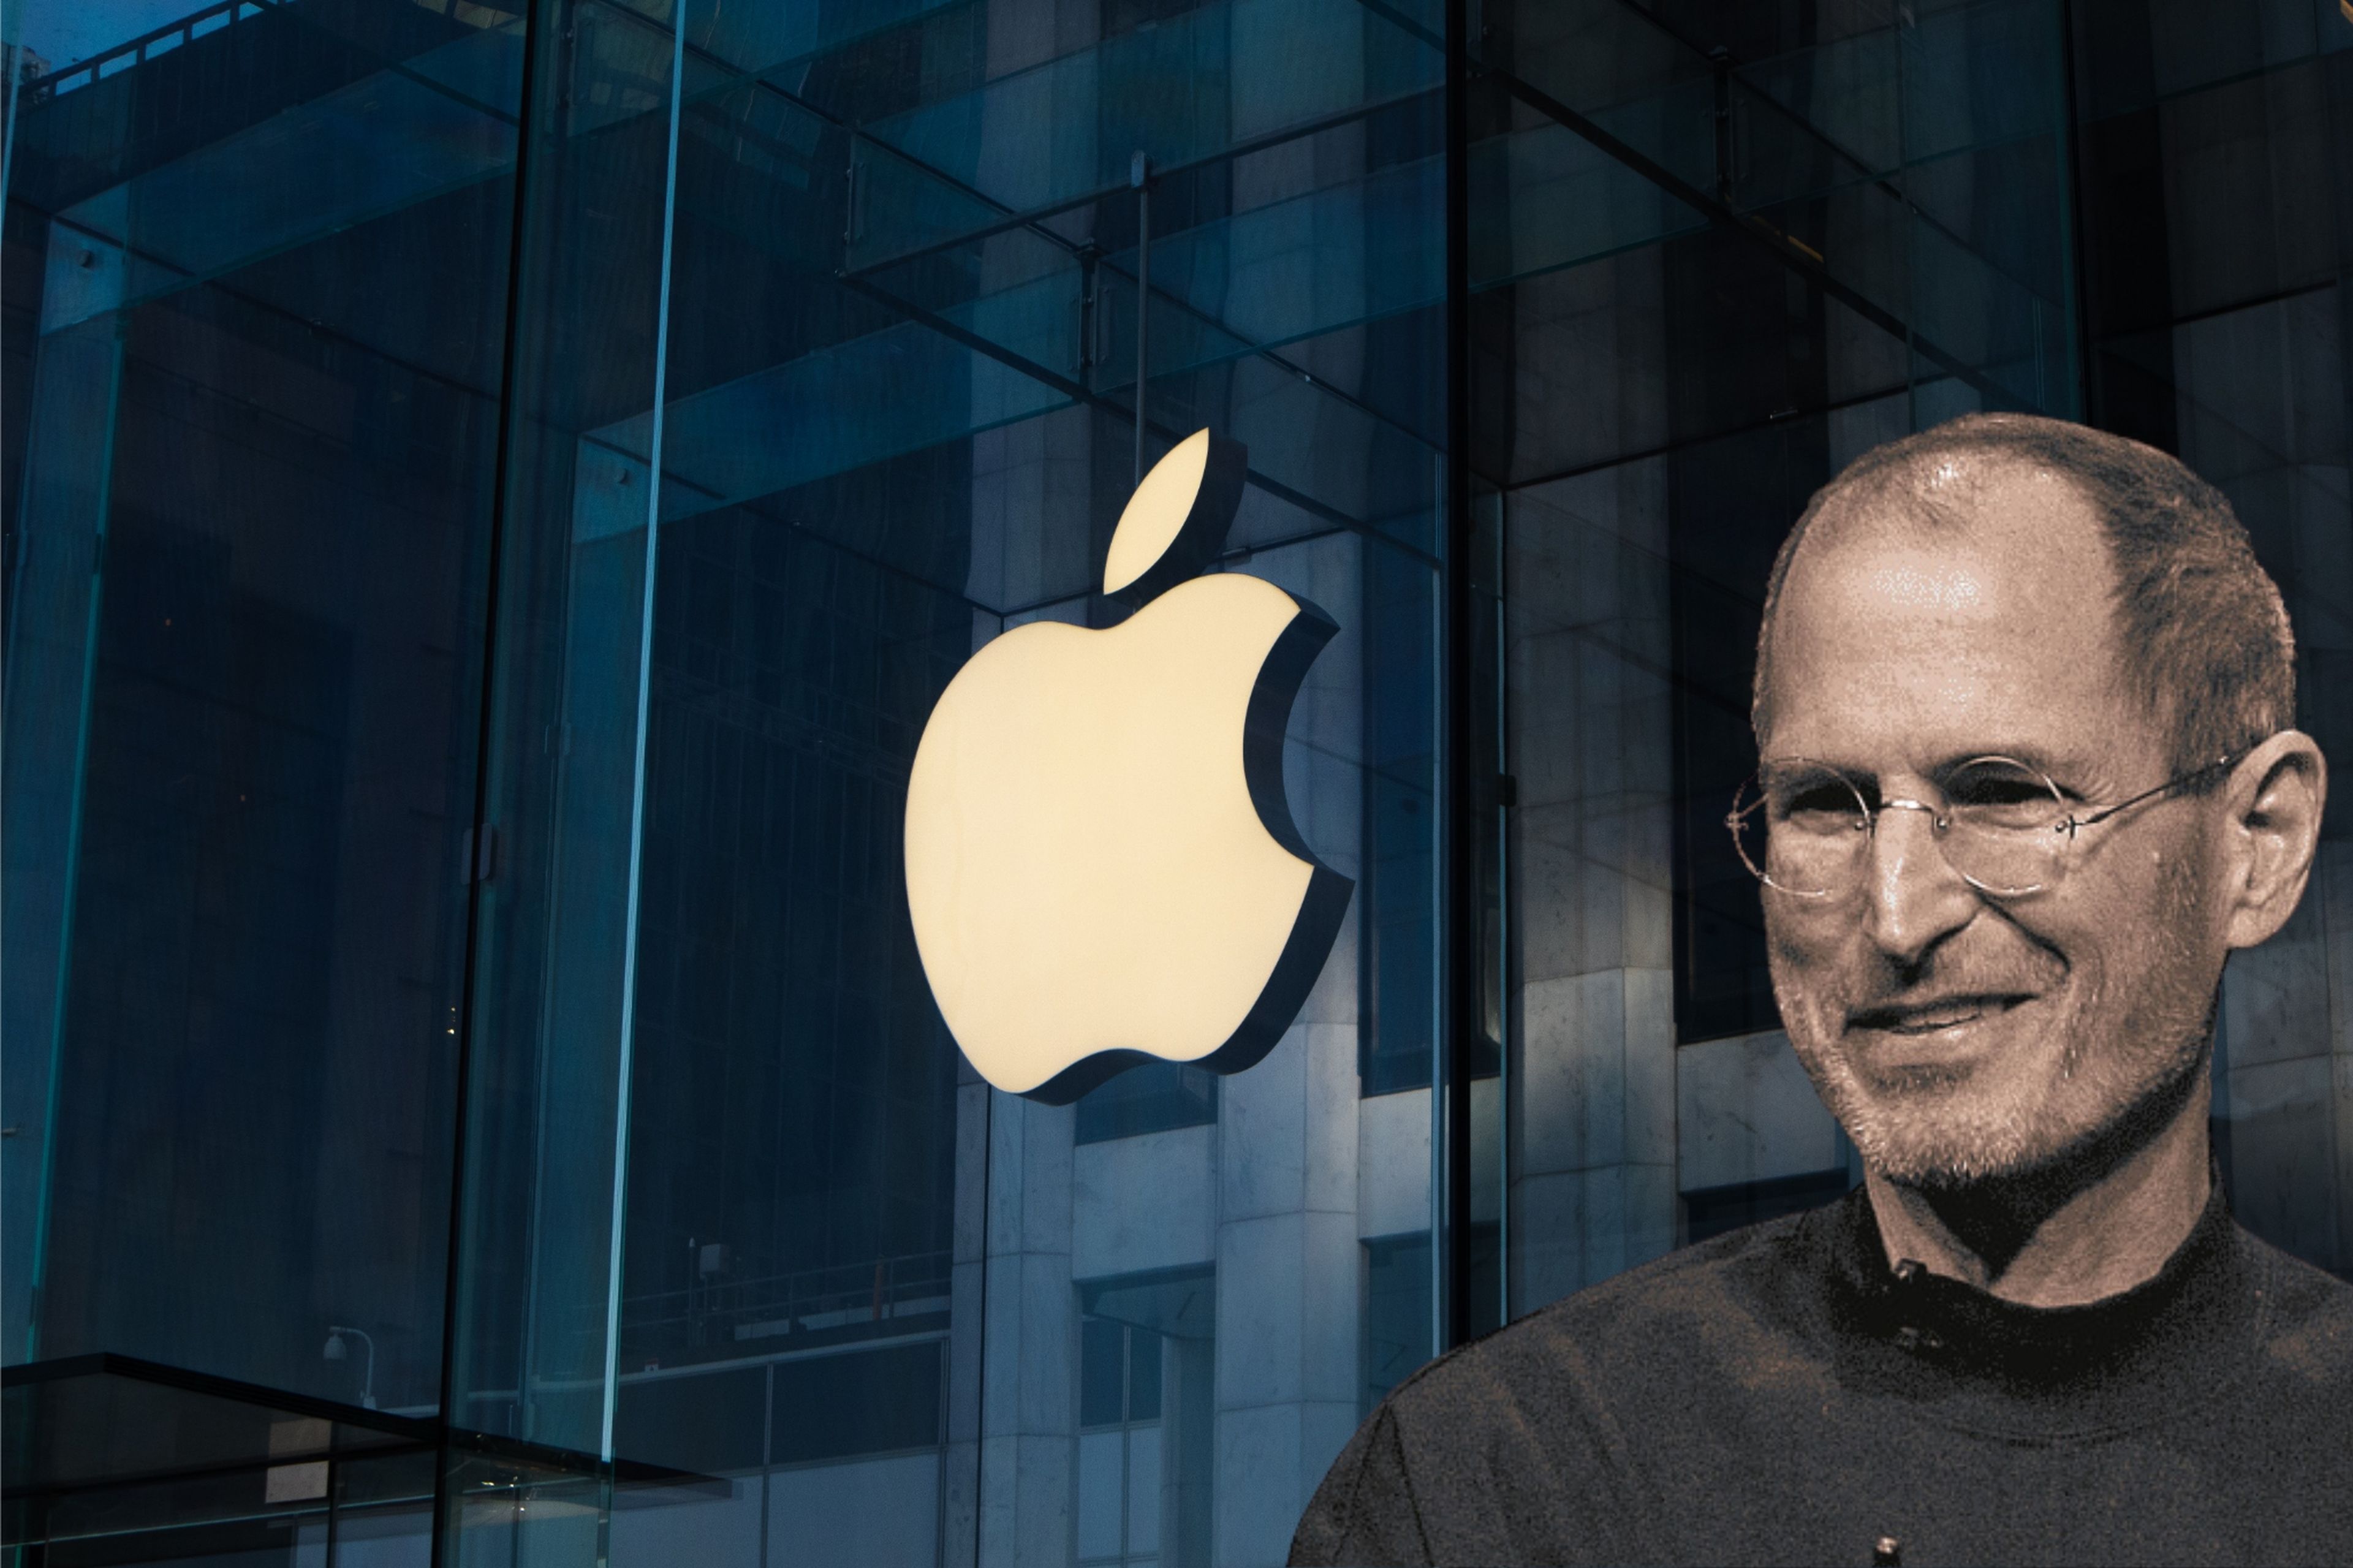 Steve Jobs en Apple